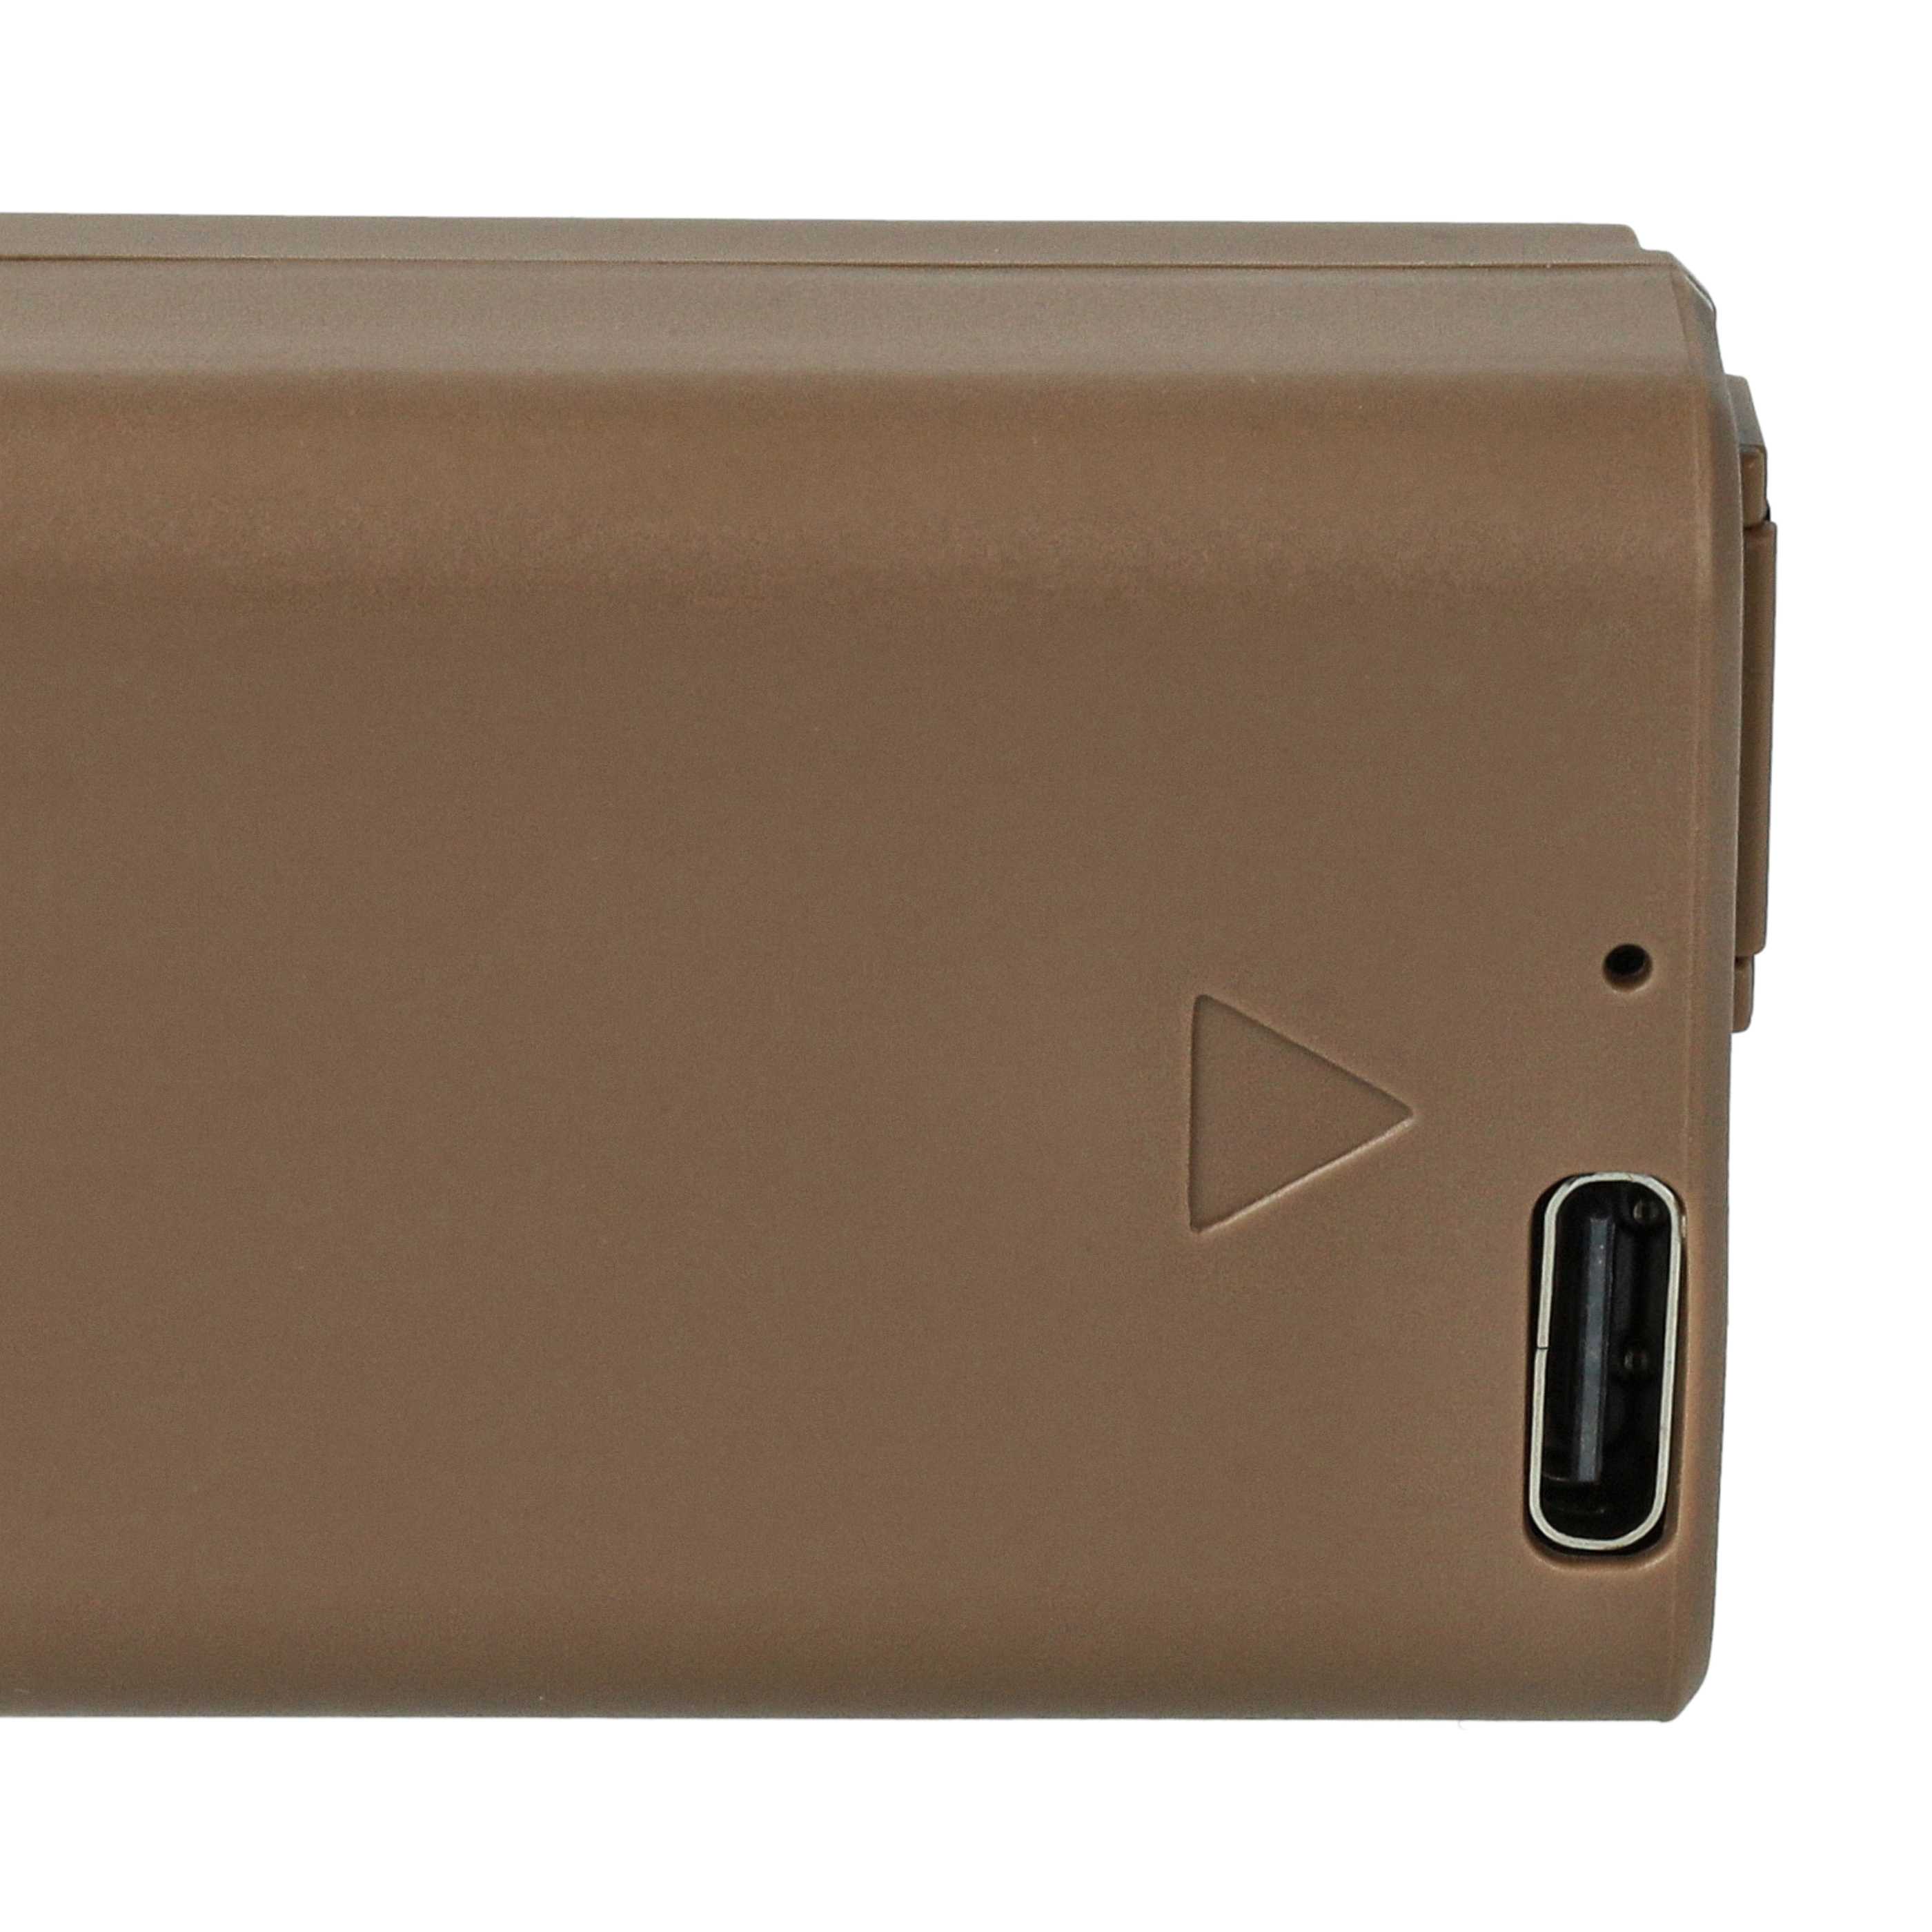 Batería reemplaza Sony NP-FW50 para cámara Sony - 1030 mAh 7,4 V Li-Ion con chip, con clavija (h) USB C